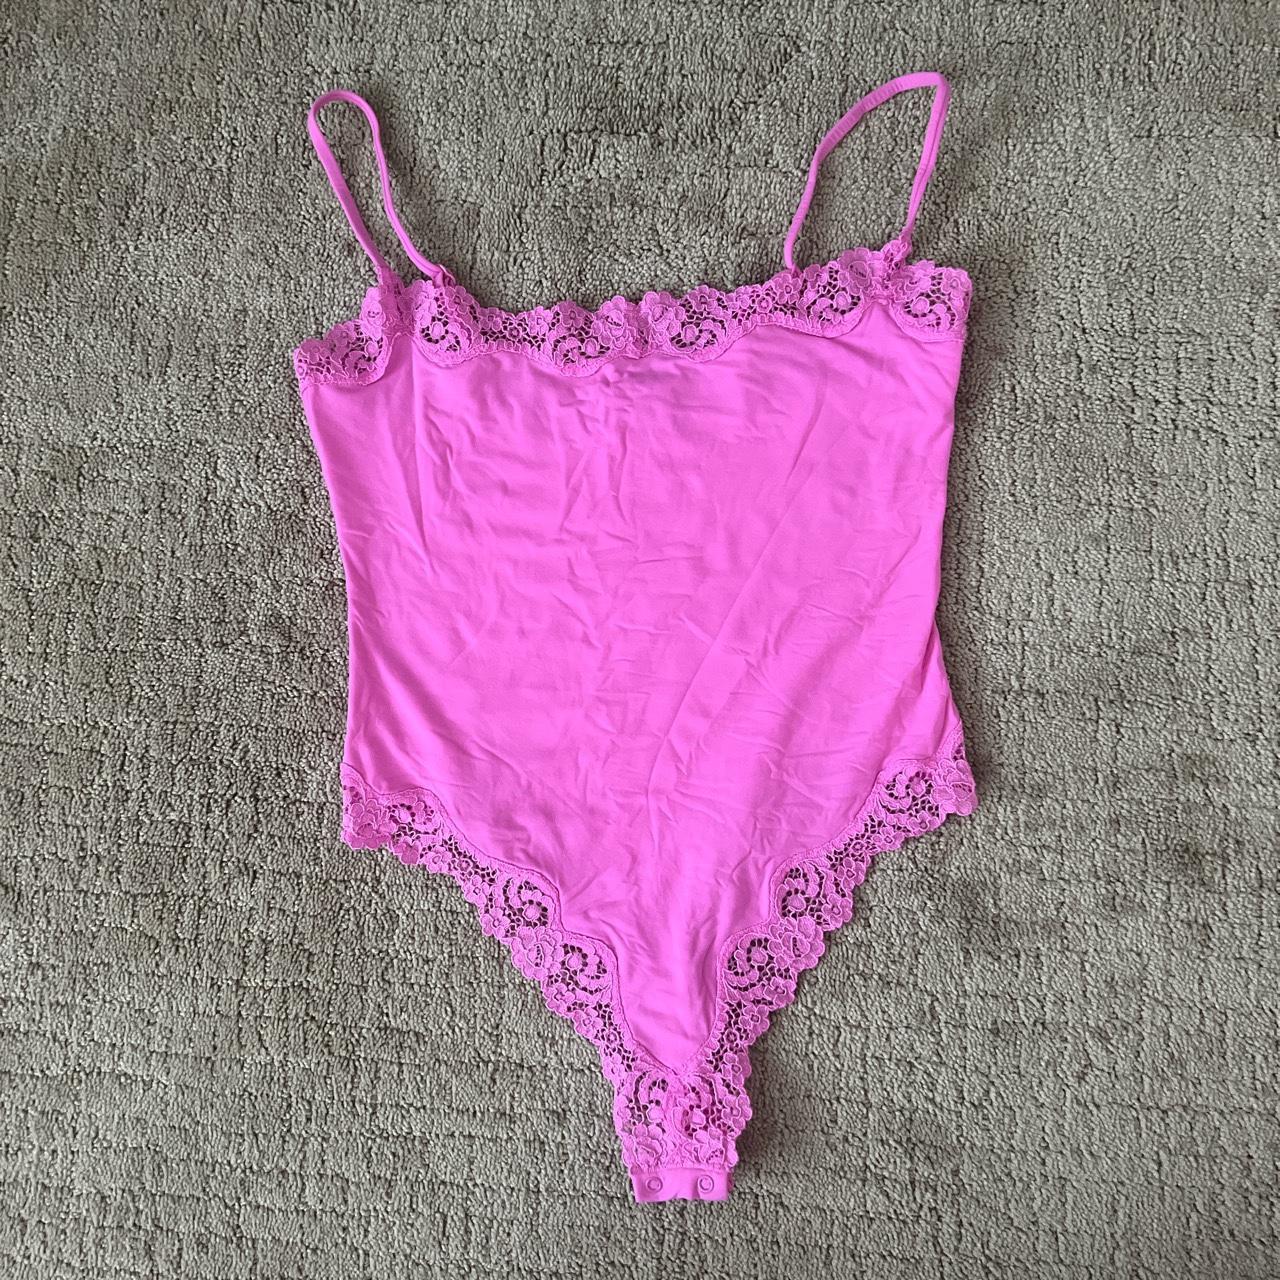 Size small hot pink skims bodysuit Lace super cute... - Depop